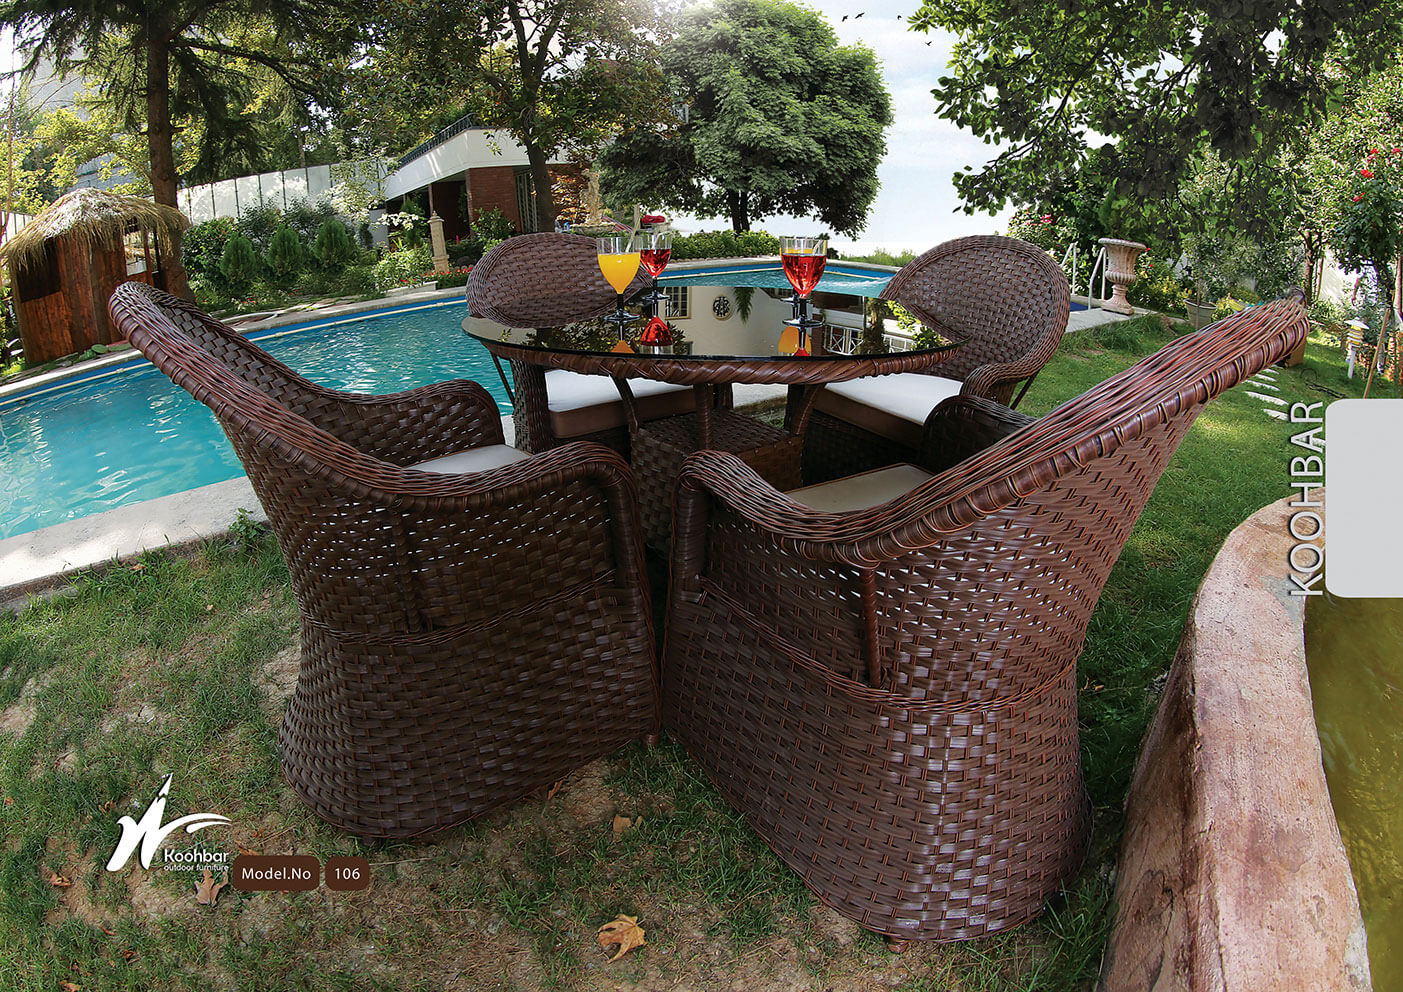 kohbar patio conversation sets 106 model0 - میز و صندلی حصیری باغی ویلا کوهبر مدل ۱۰۶ -  - patio-dining-furniture